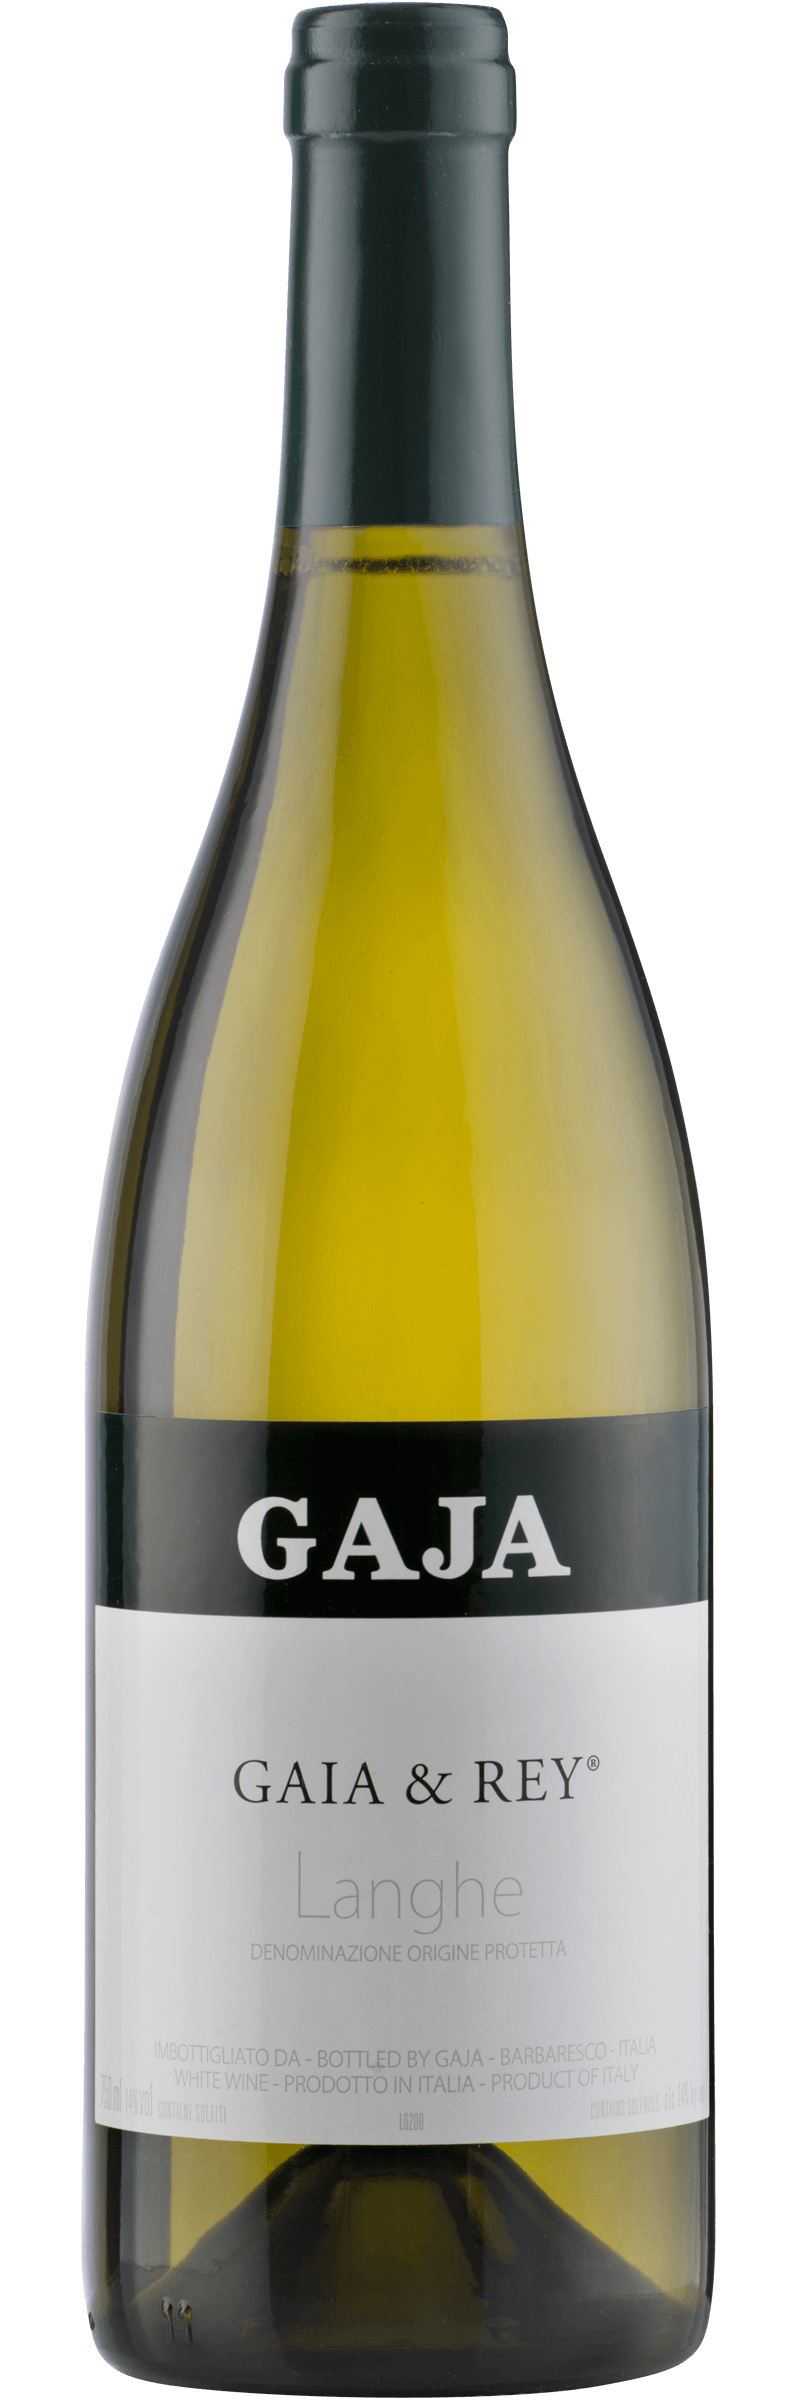 Gaja Langhe Gaia & Rey 2018 wine bottle